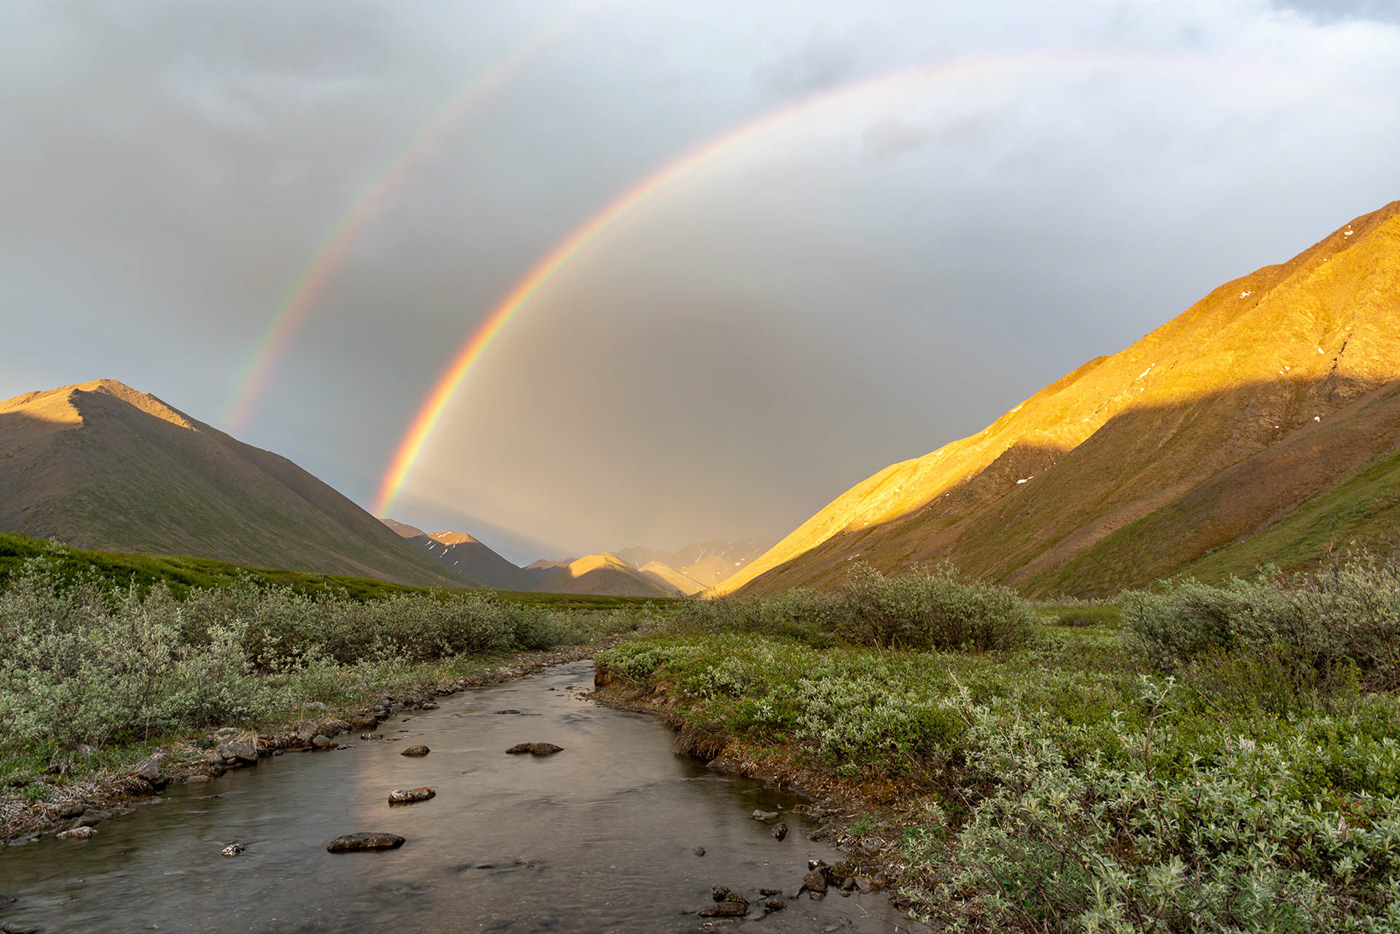 Rainbow over the tundra in Alaska.